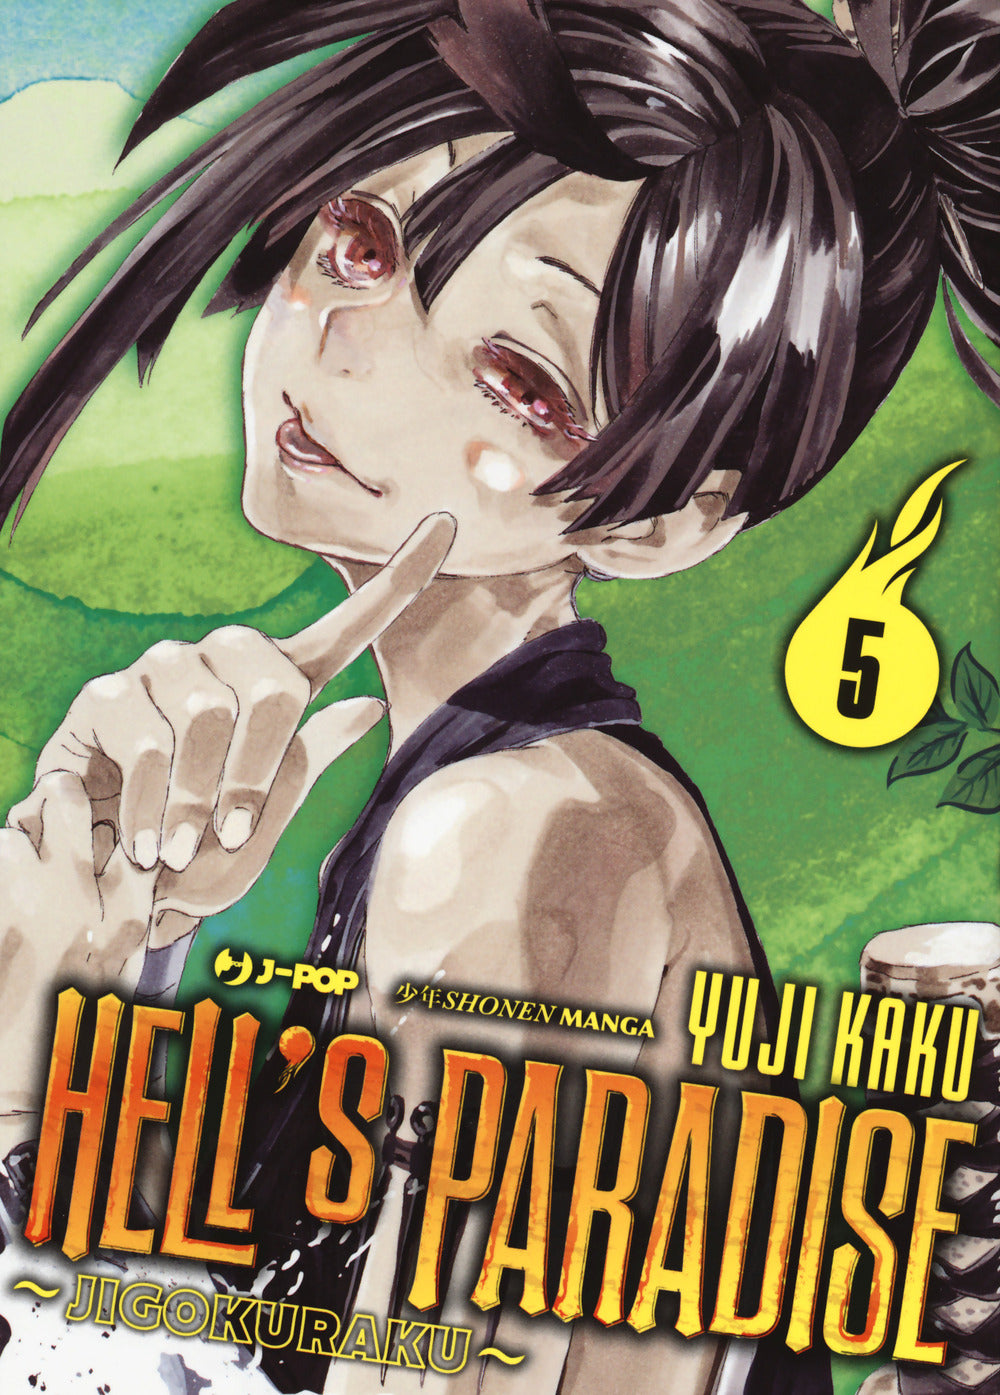 Hell's paradise. Jigokuraku. Vol. 5.